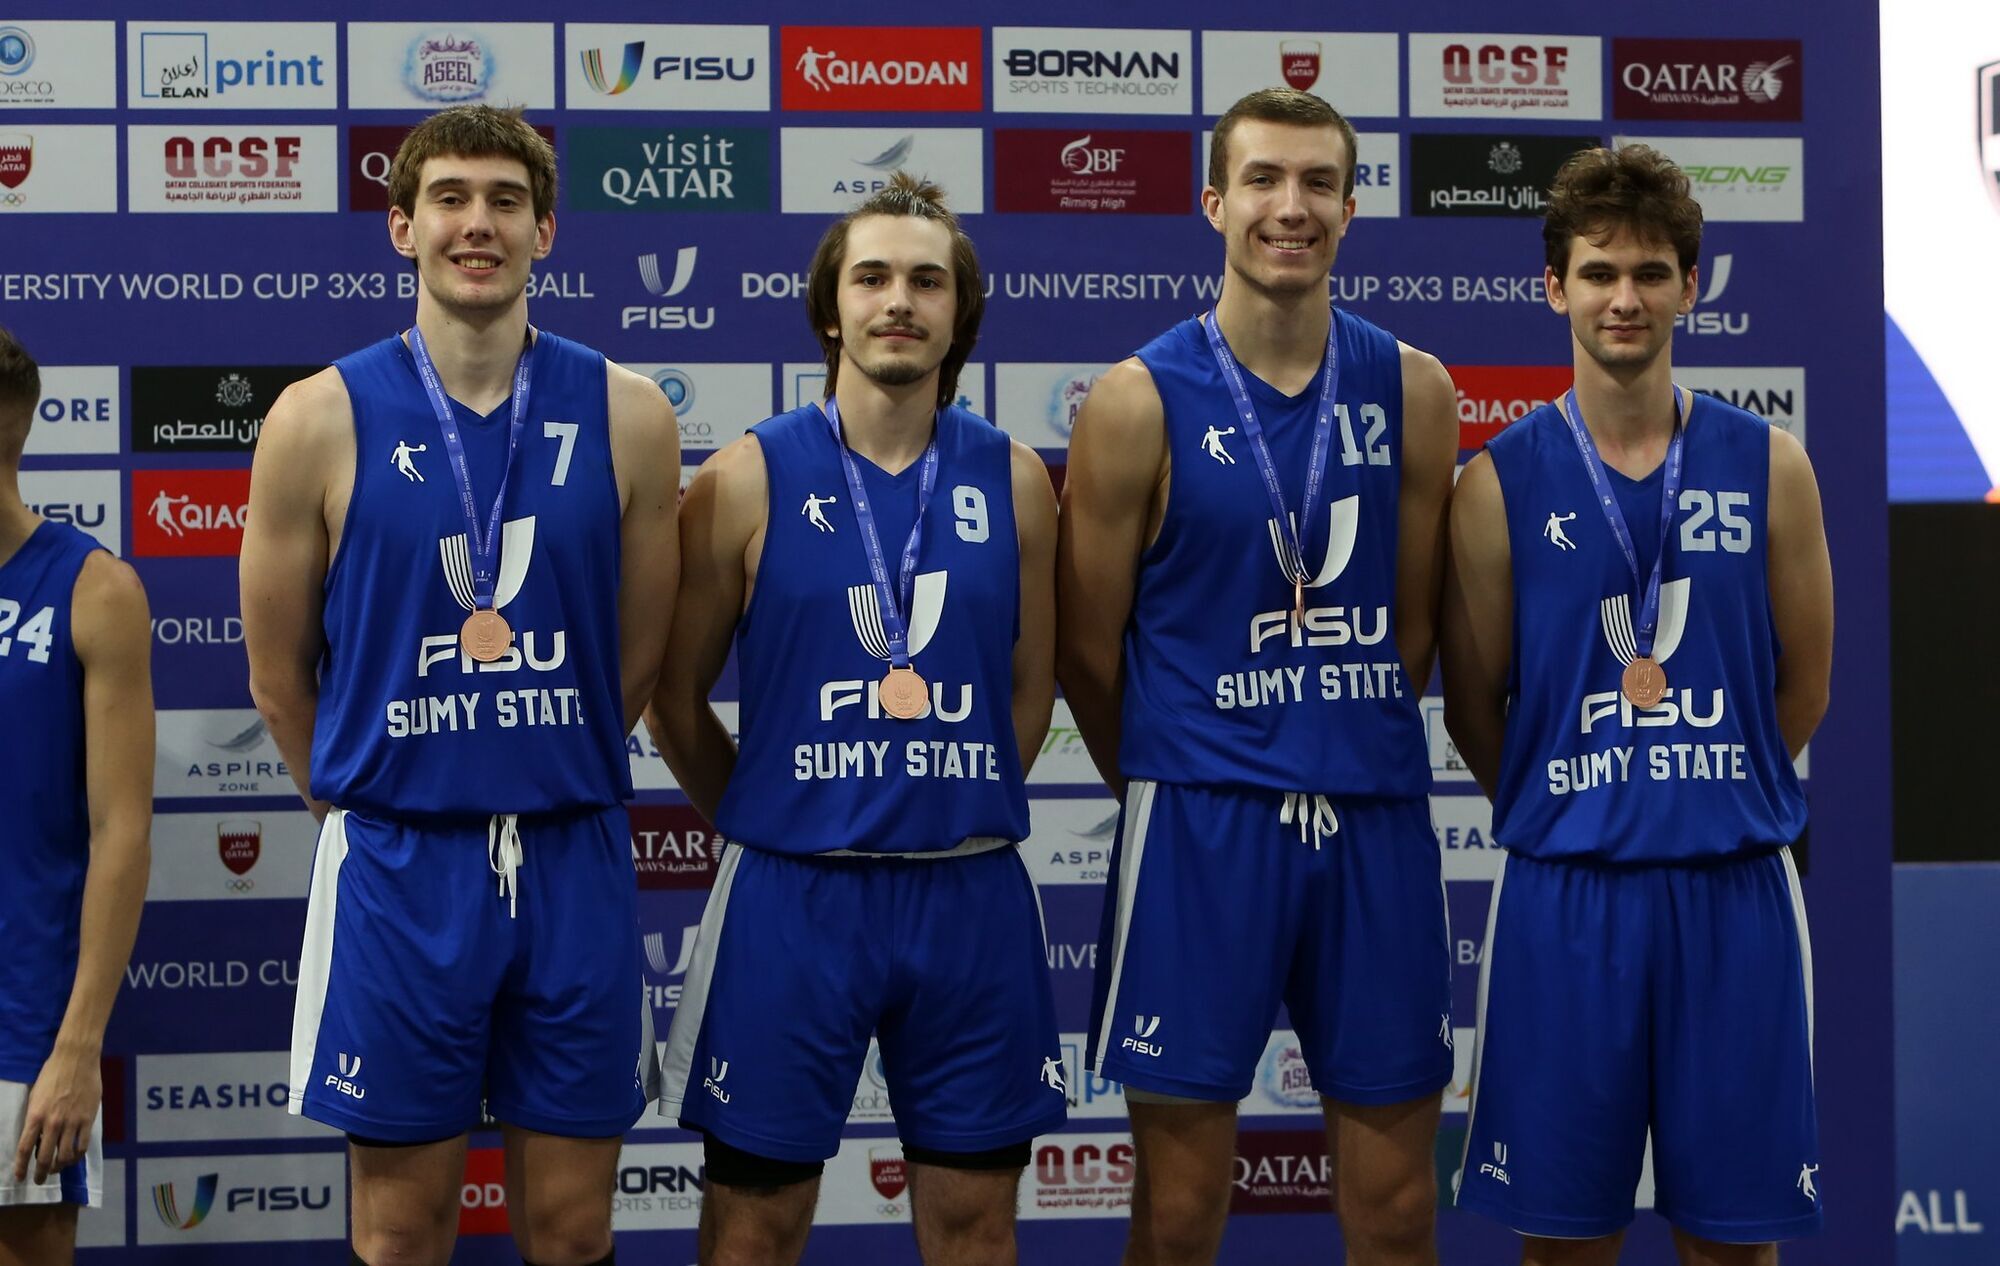 Ukrainian basketball players won two medals at the World University Basketball 3v3 Championship